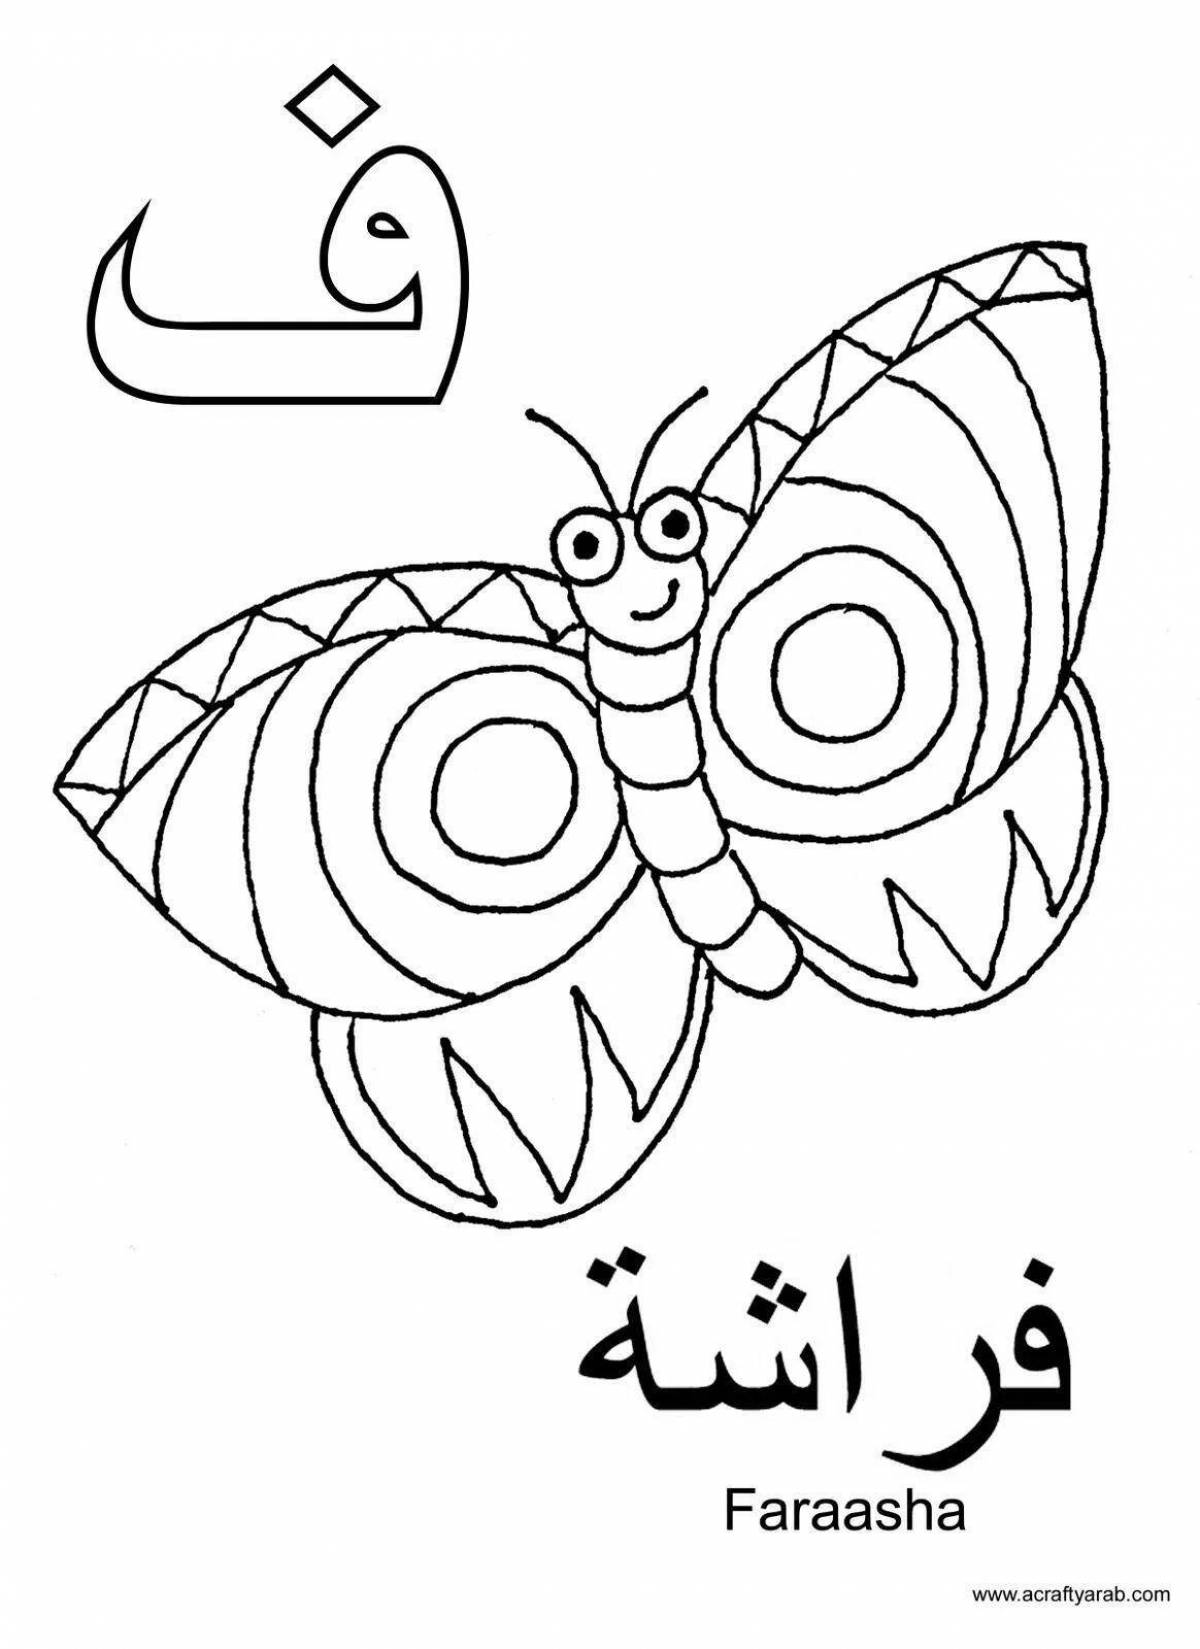 Яркая арабская раскраска для детей